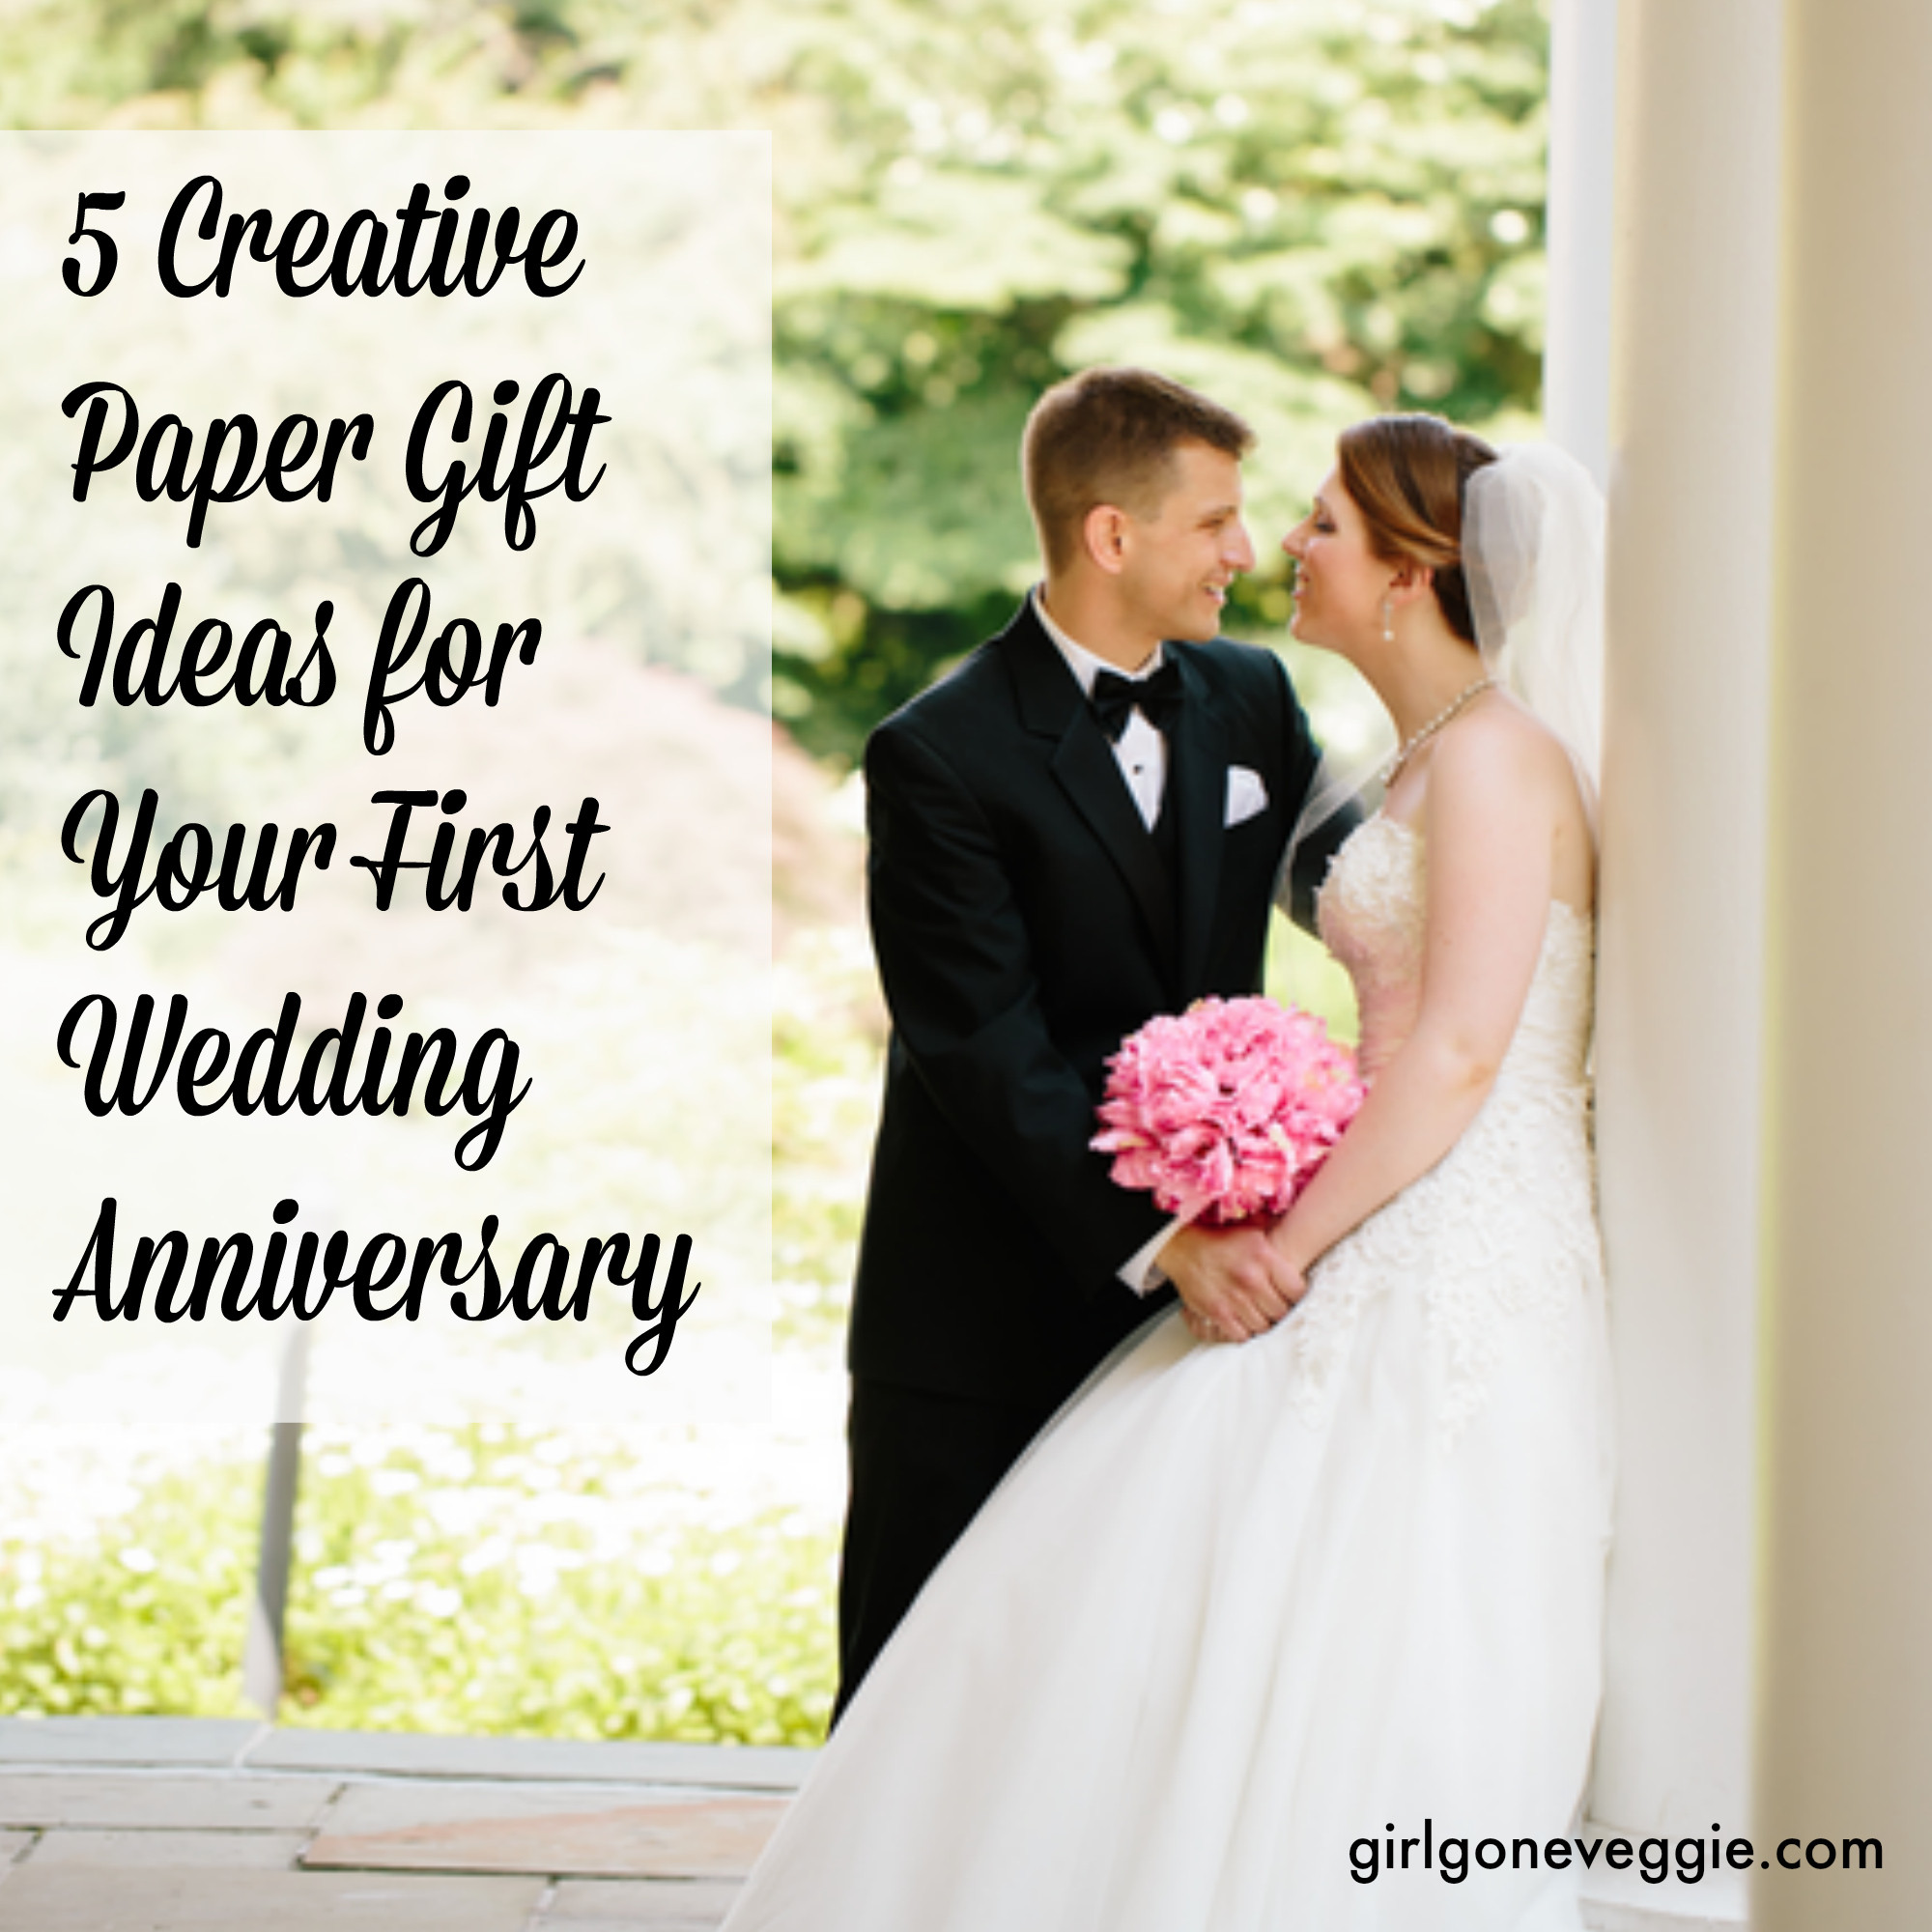 1St Wedding Anniversary Paper Gift Ideas
 5 Creative Paper Gift Ideas for Your 1st Wedding Anniversary